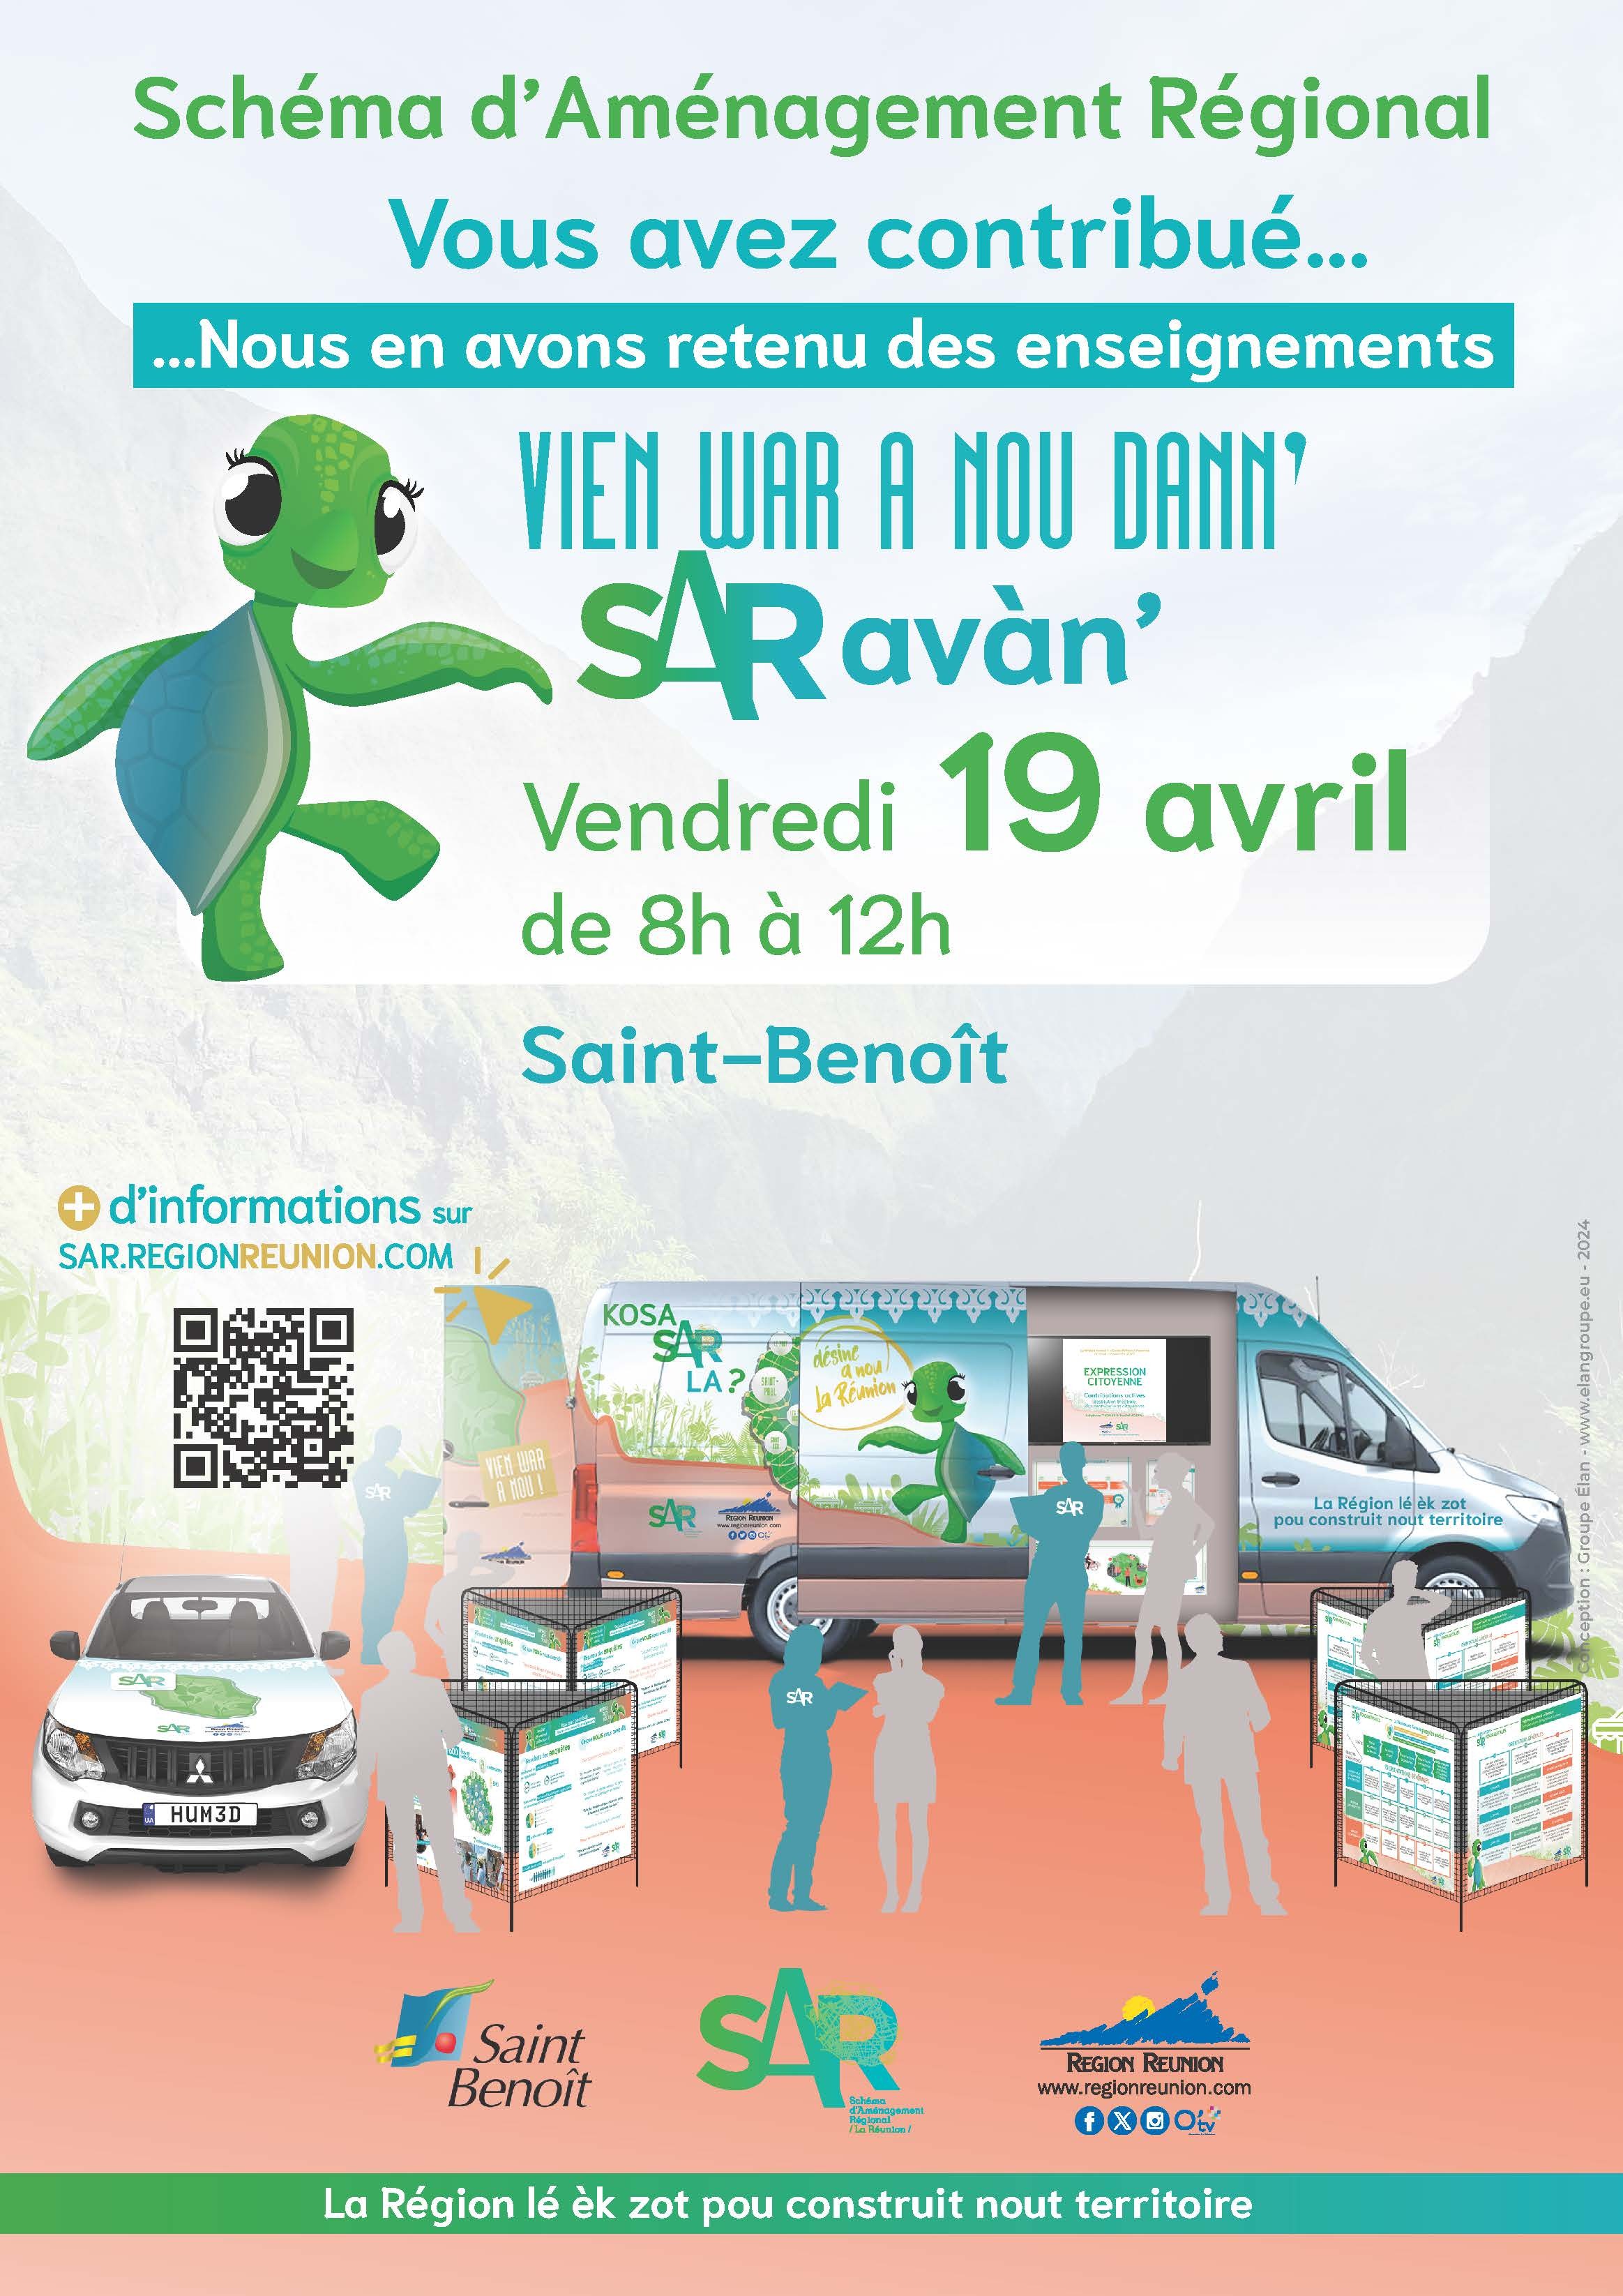 La Caravane du SAR i ar'viens dann Saint-Benoît !